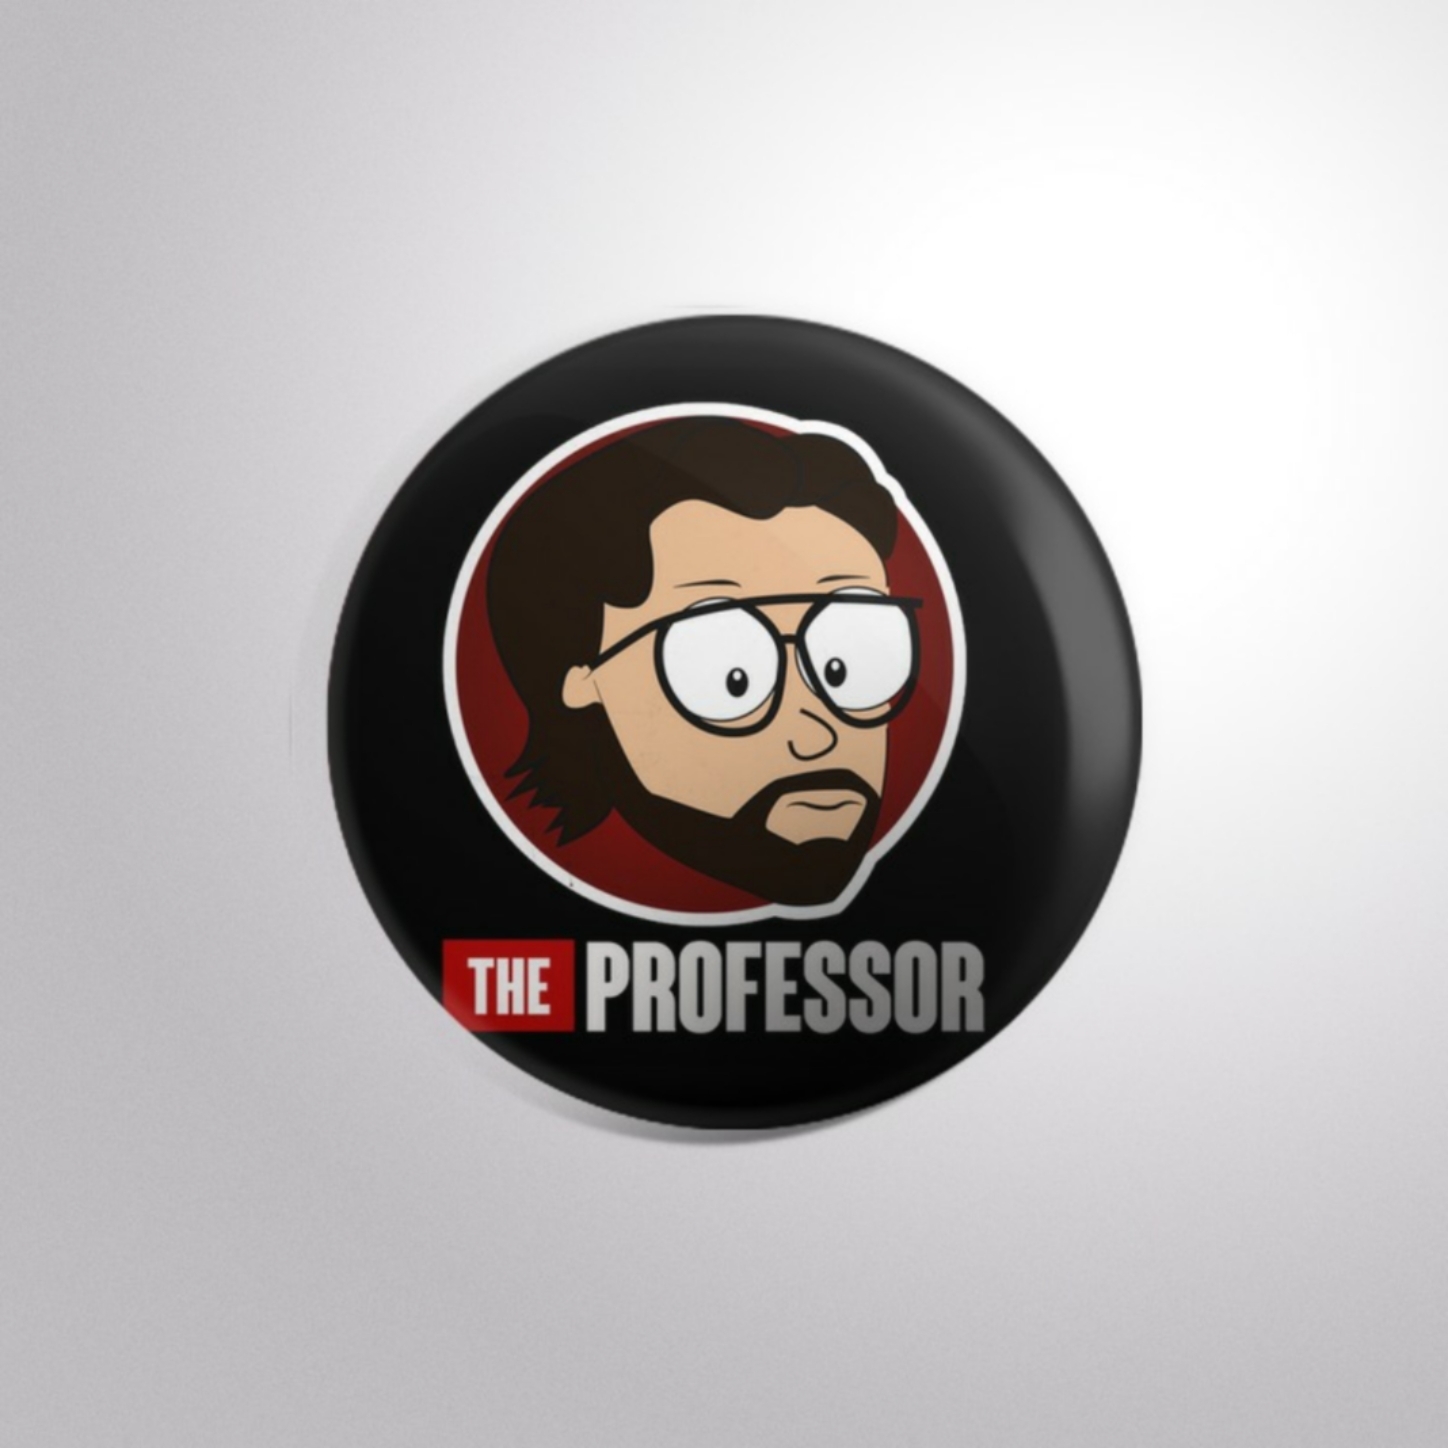 The professor Badge